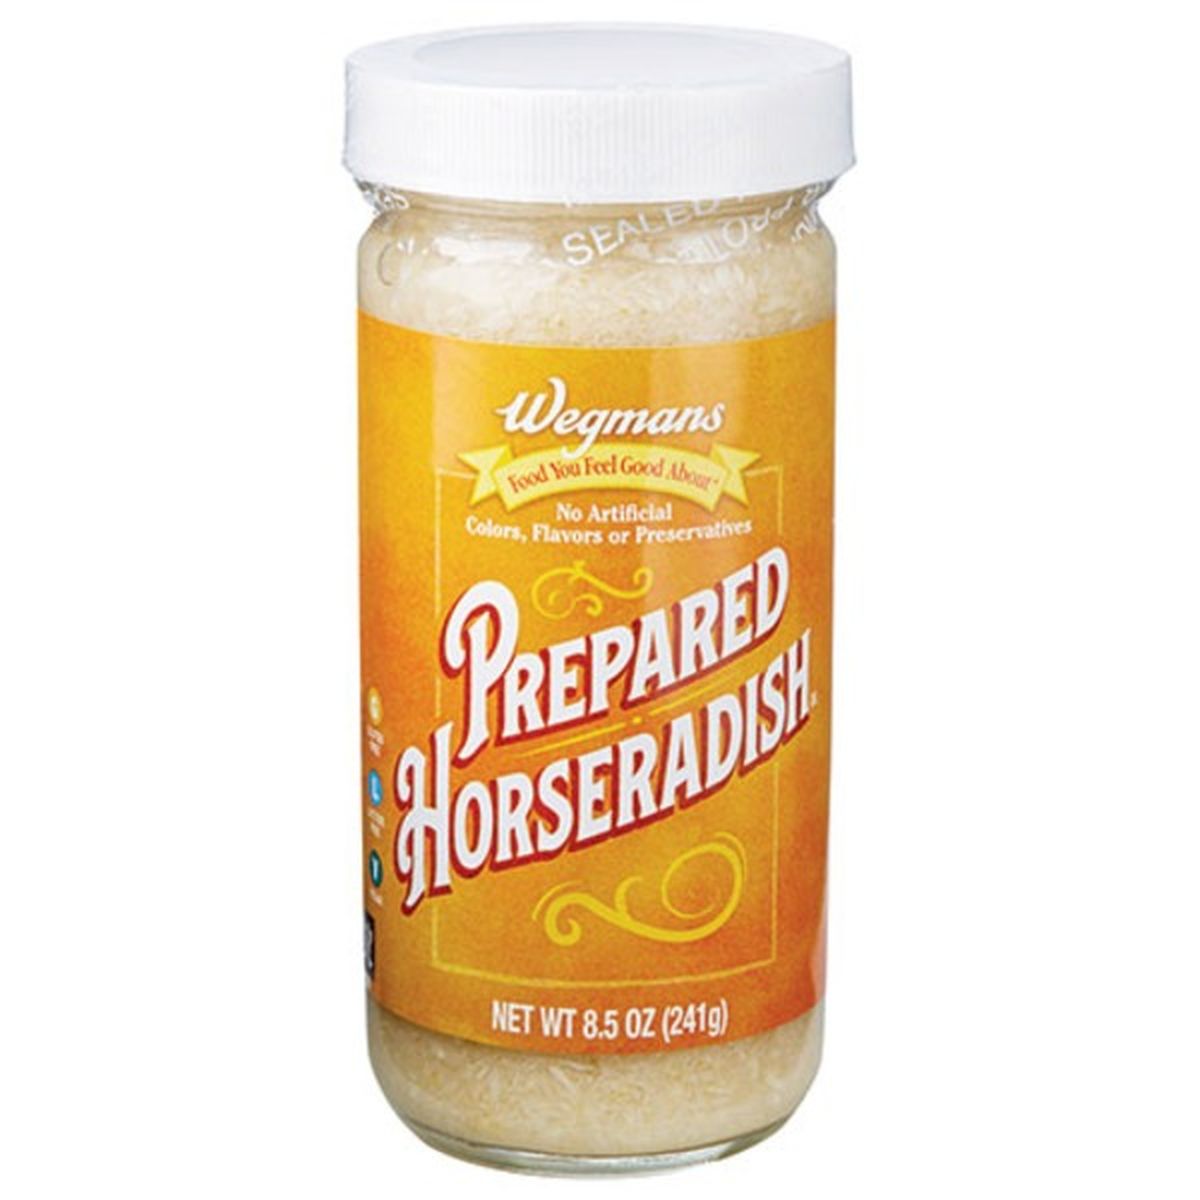 Calories in Wegmans Prepared Horseradish